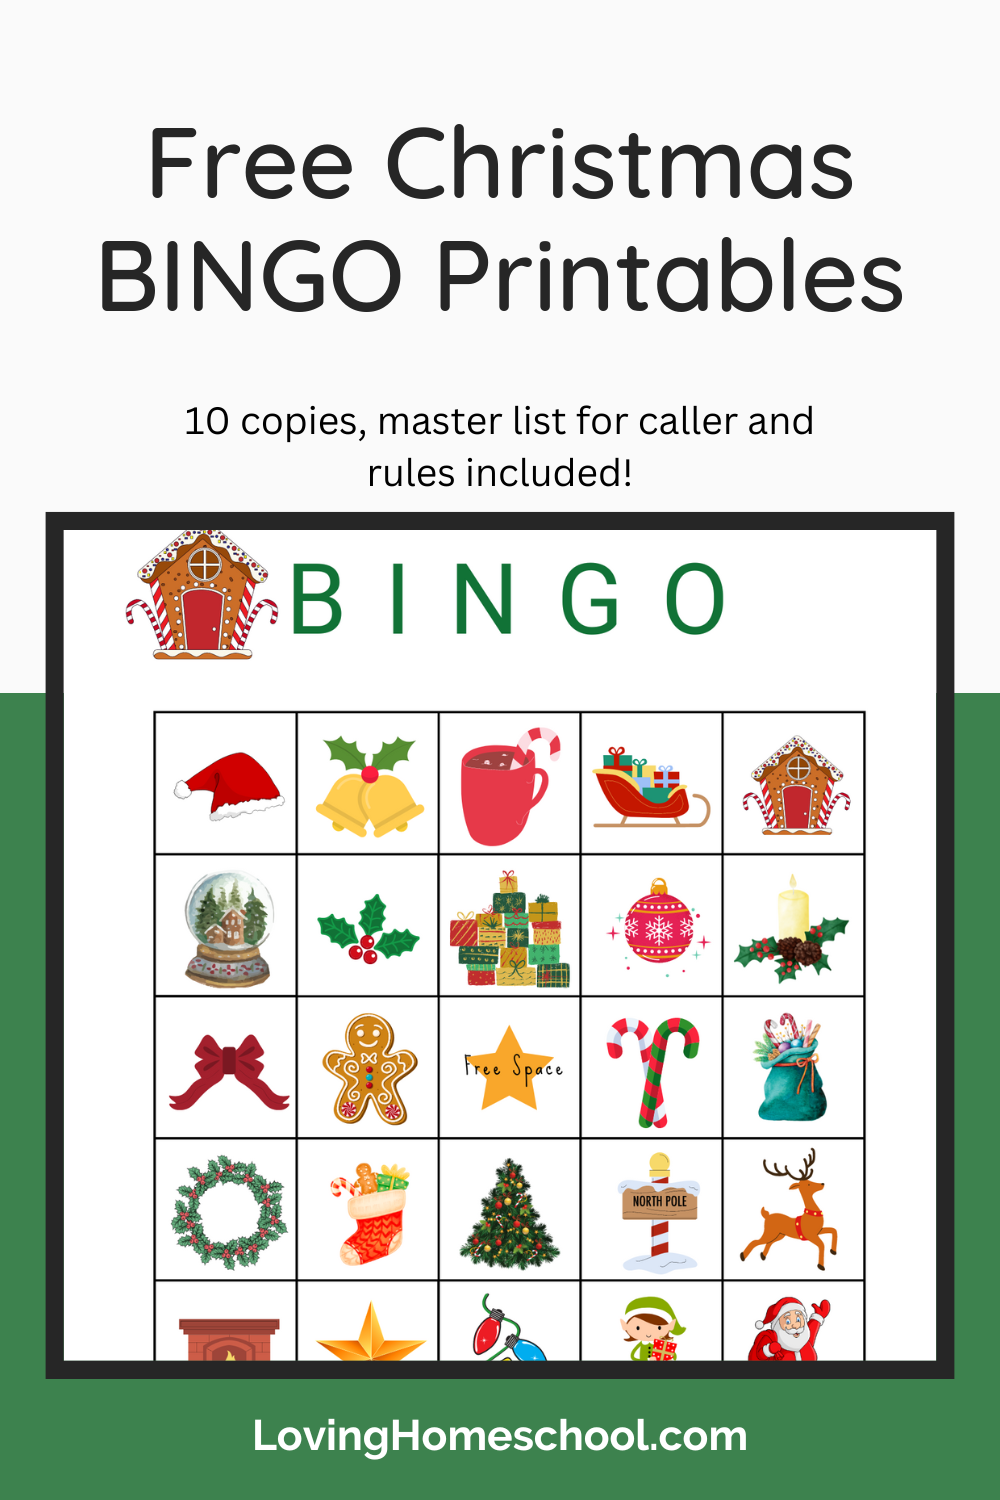 Free Christmas BINGO Printables Pinterest Pin